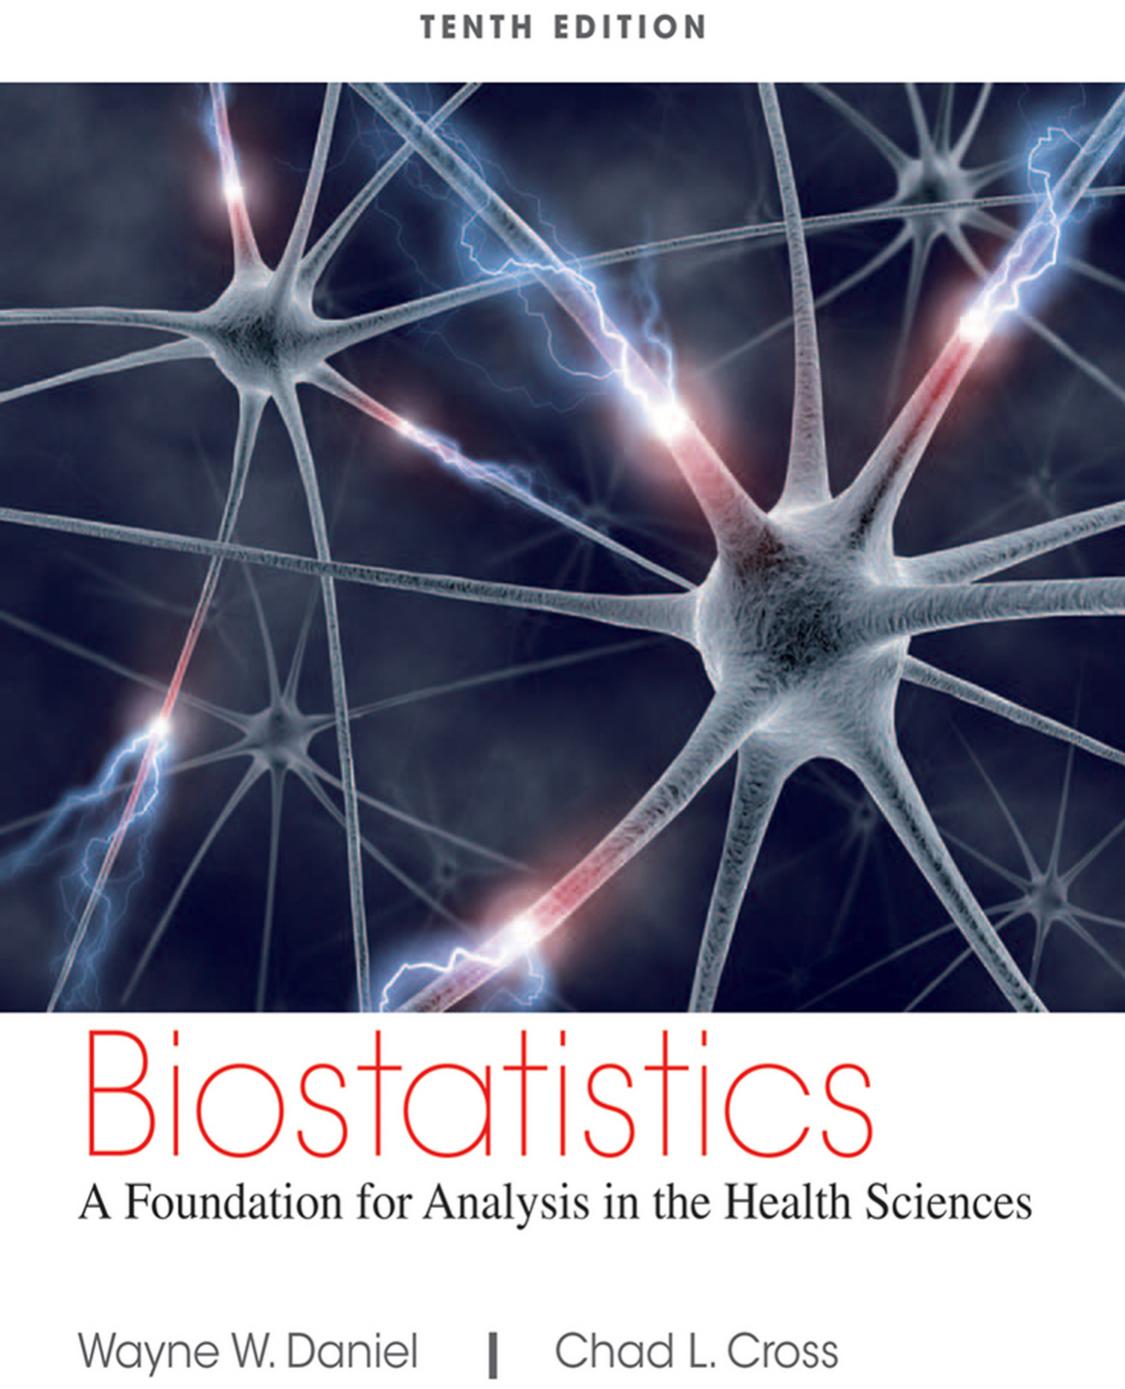 Biostatistics: A Foundation for Analysis in the Health Sciences by Wayne W. Daniel Chad L.Cross